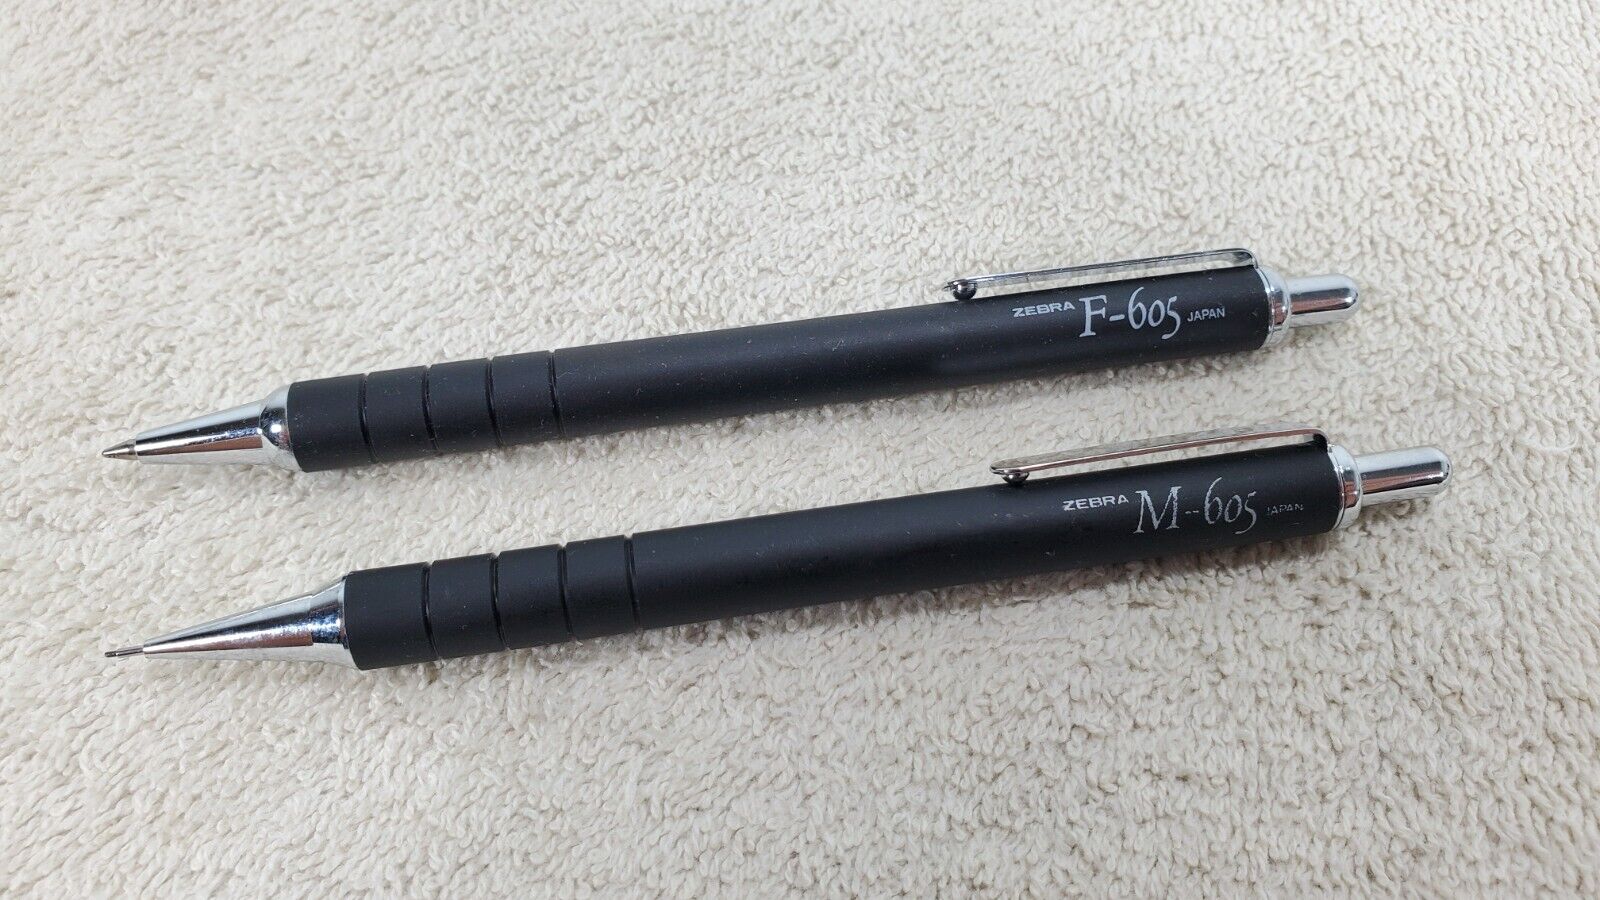 Lot 2 Zebra Mechanical Pencil and Pen M-605, F-605